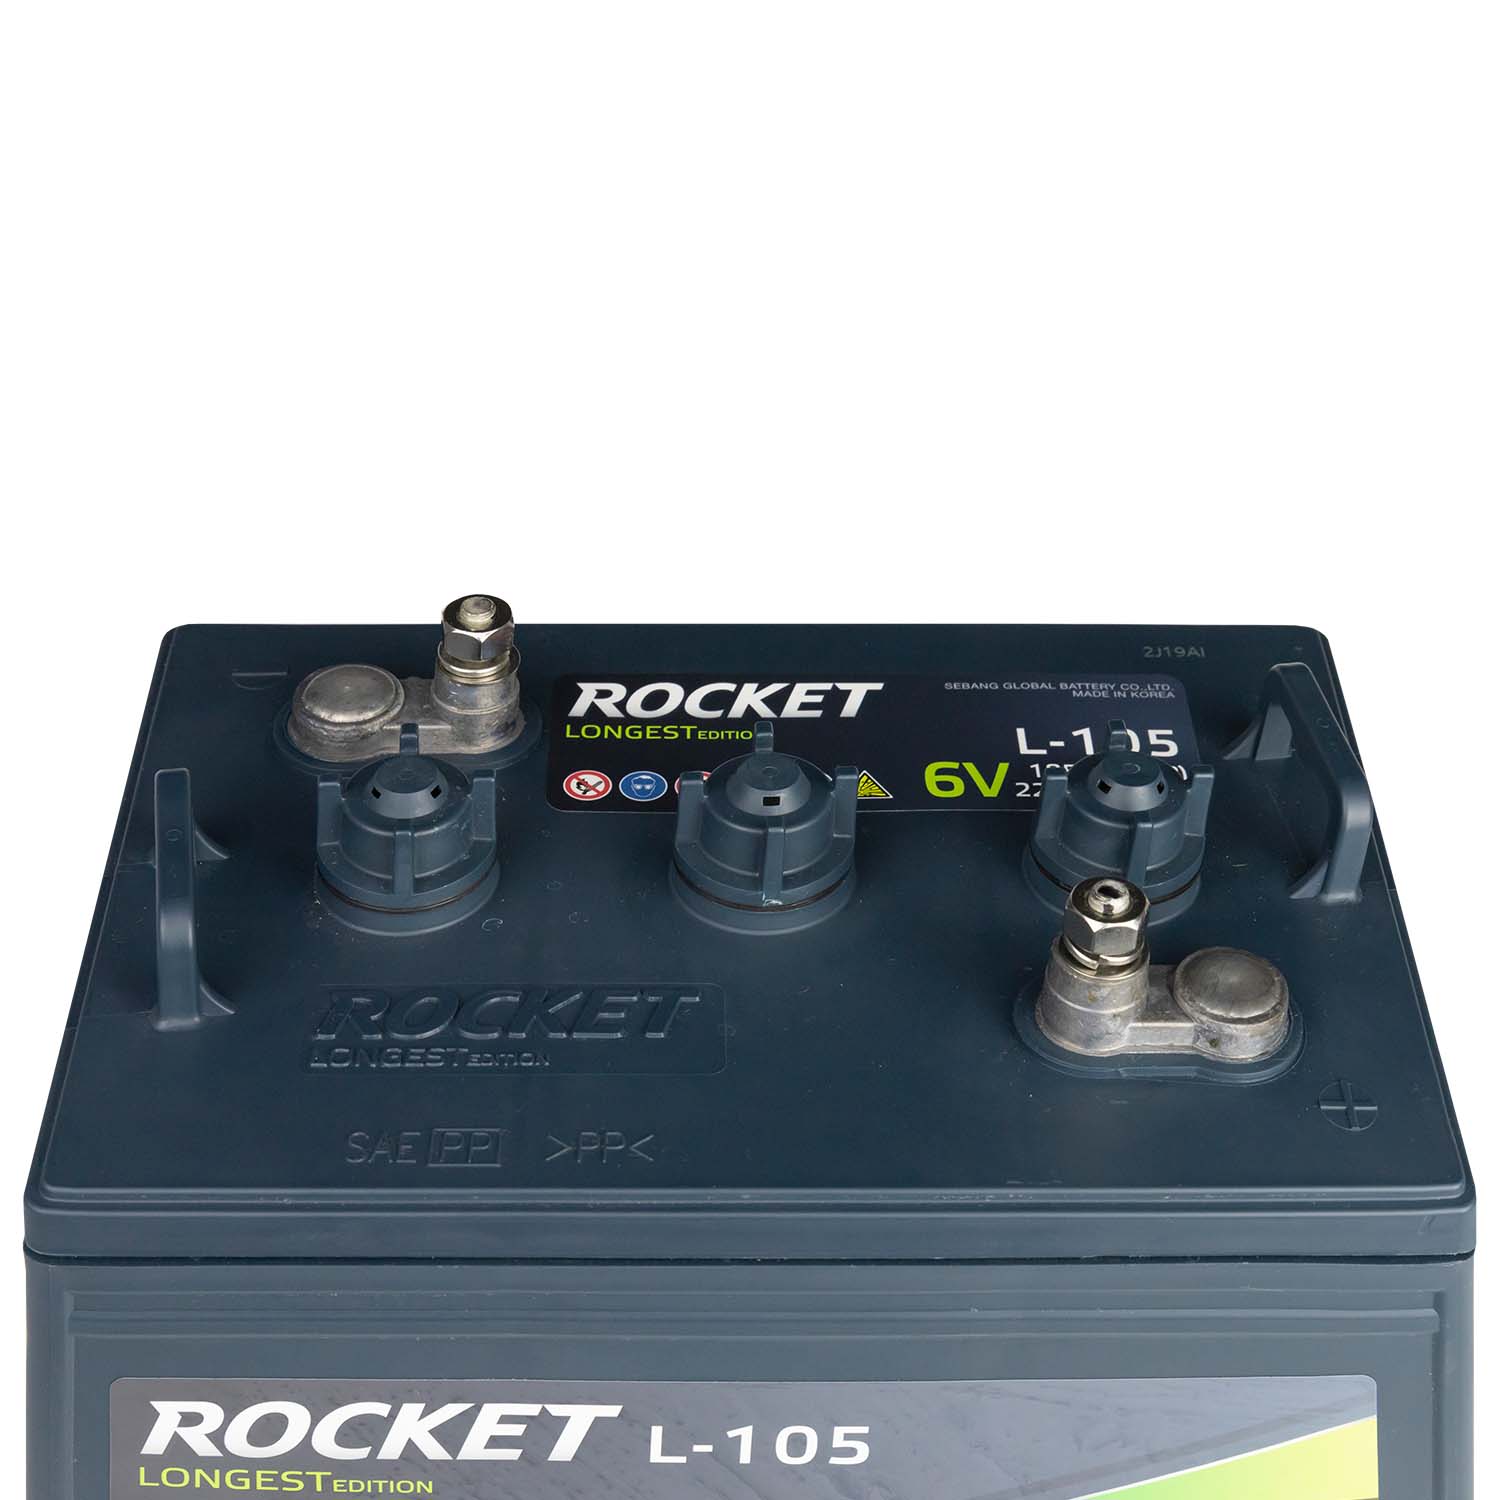 Rocket Deep Cycle Batterie L-105 6V 225Ah